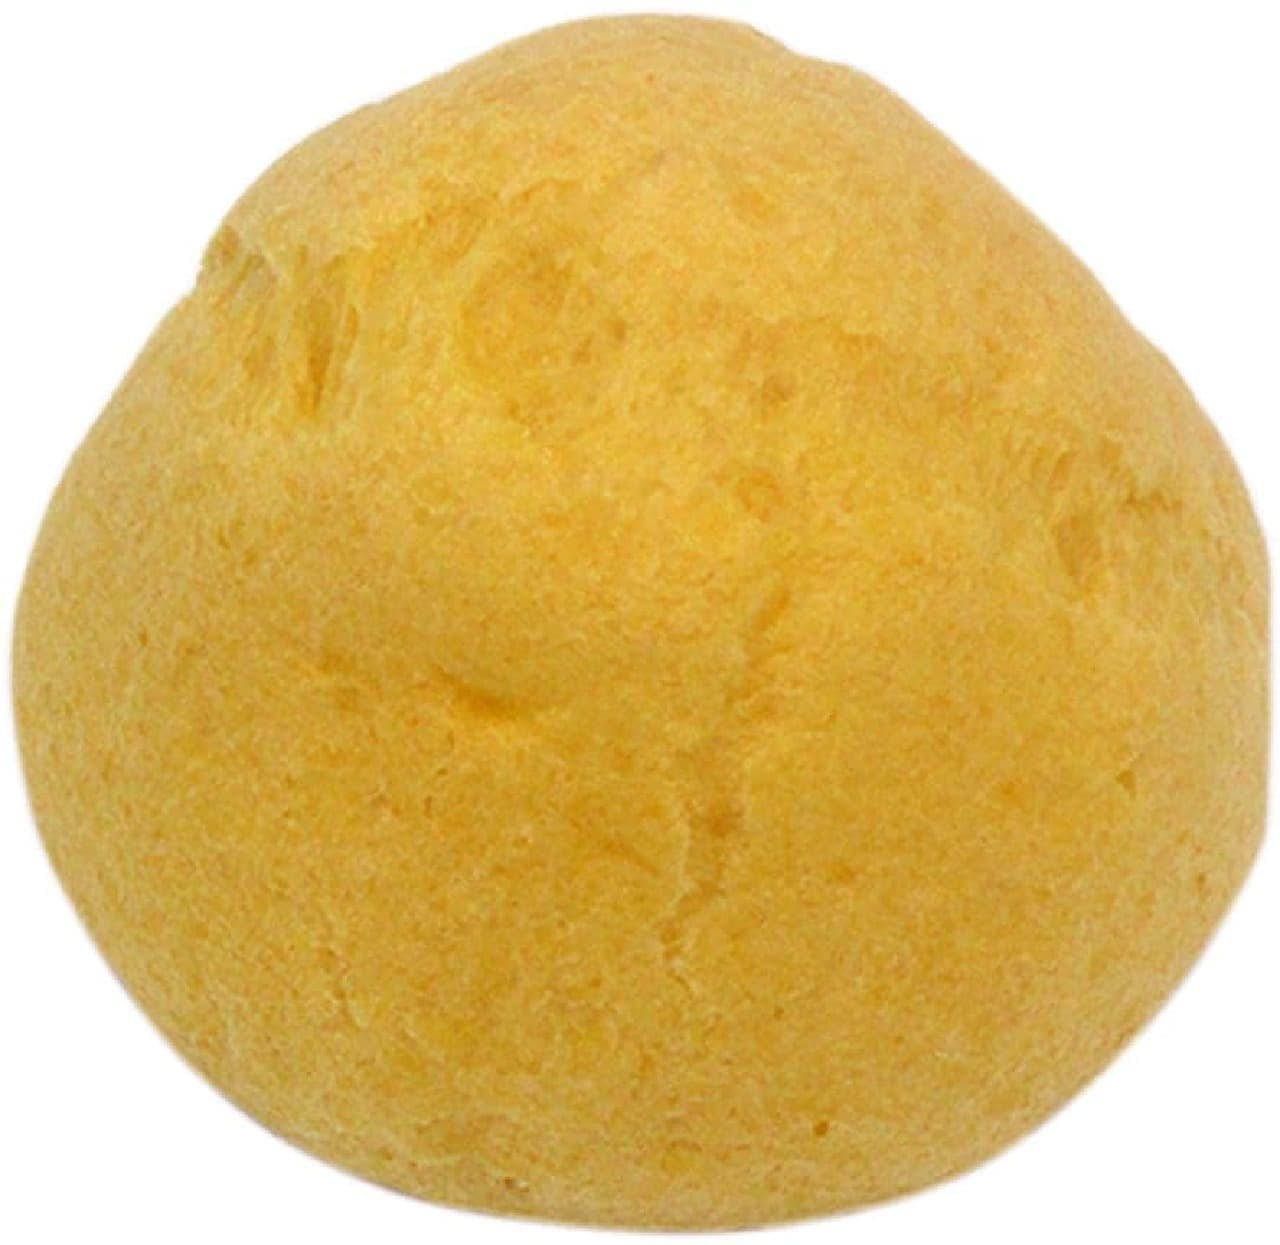 7-ELEVEN "Setouchi Lemon & Rare Cheese Moco